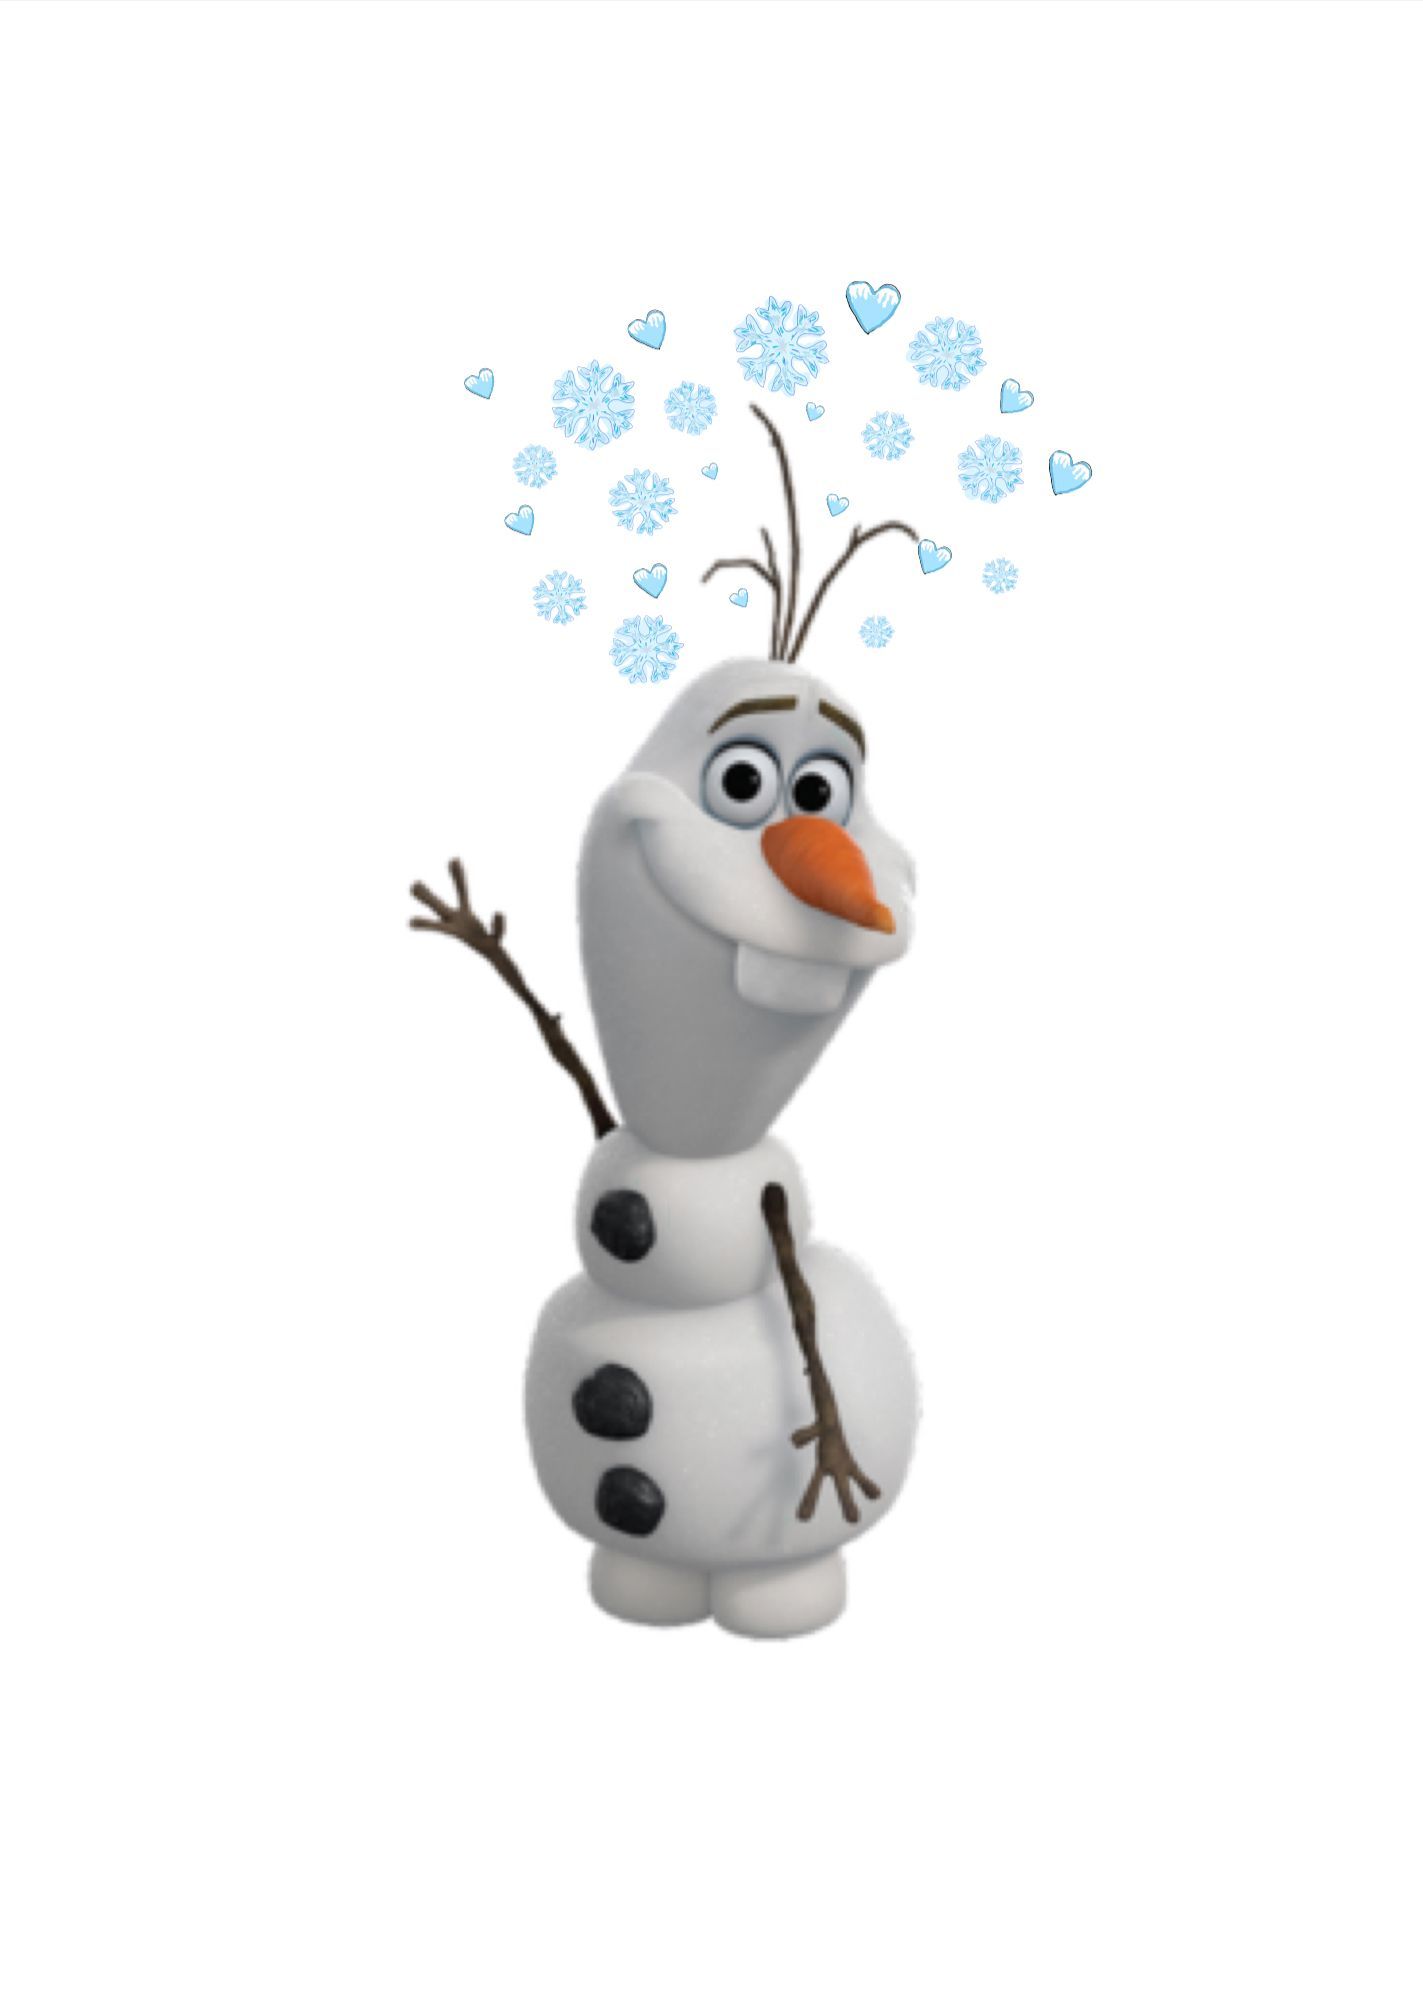 A cartoon snowman with hearts around it - Olaf